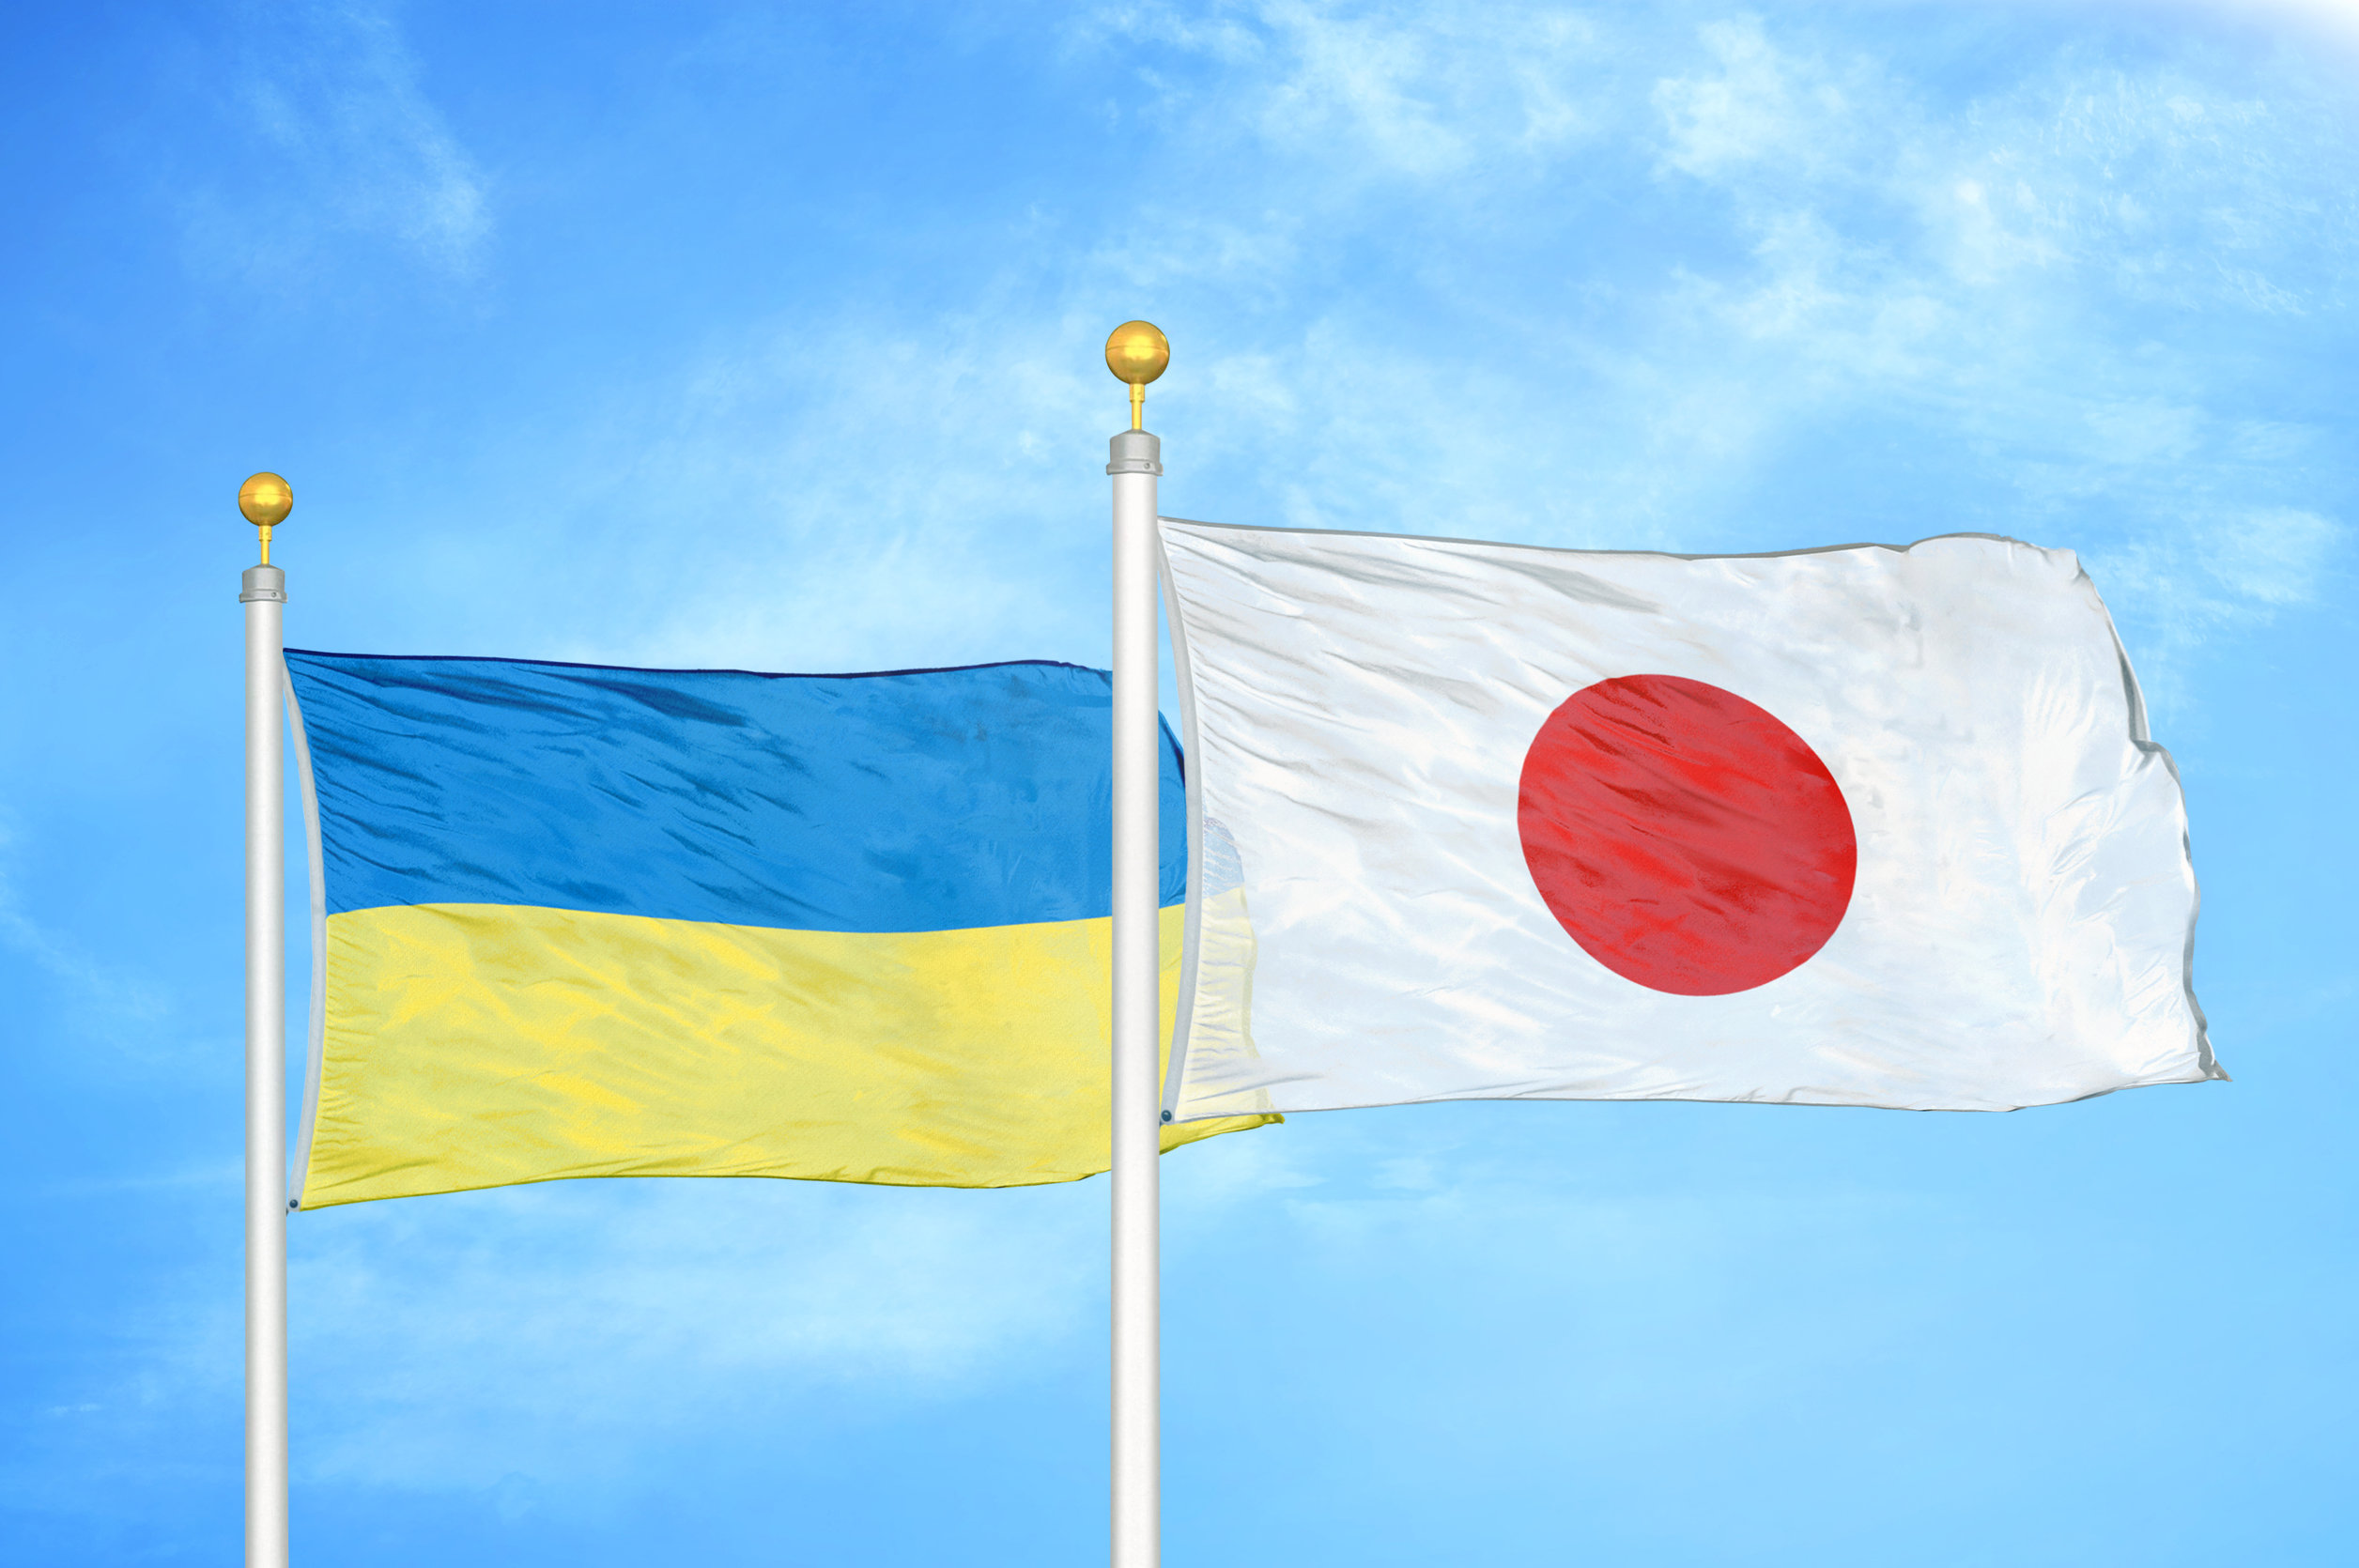 Japan and Ukraine